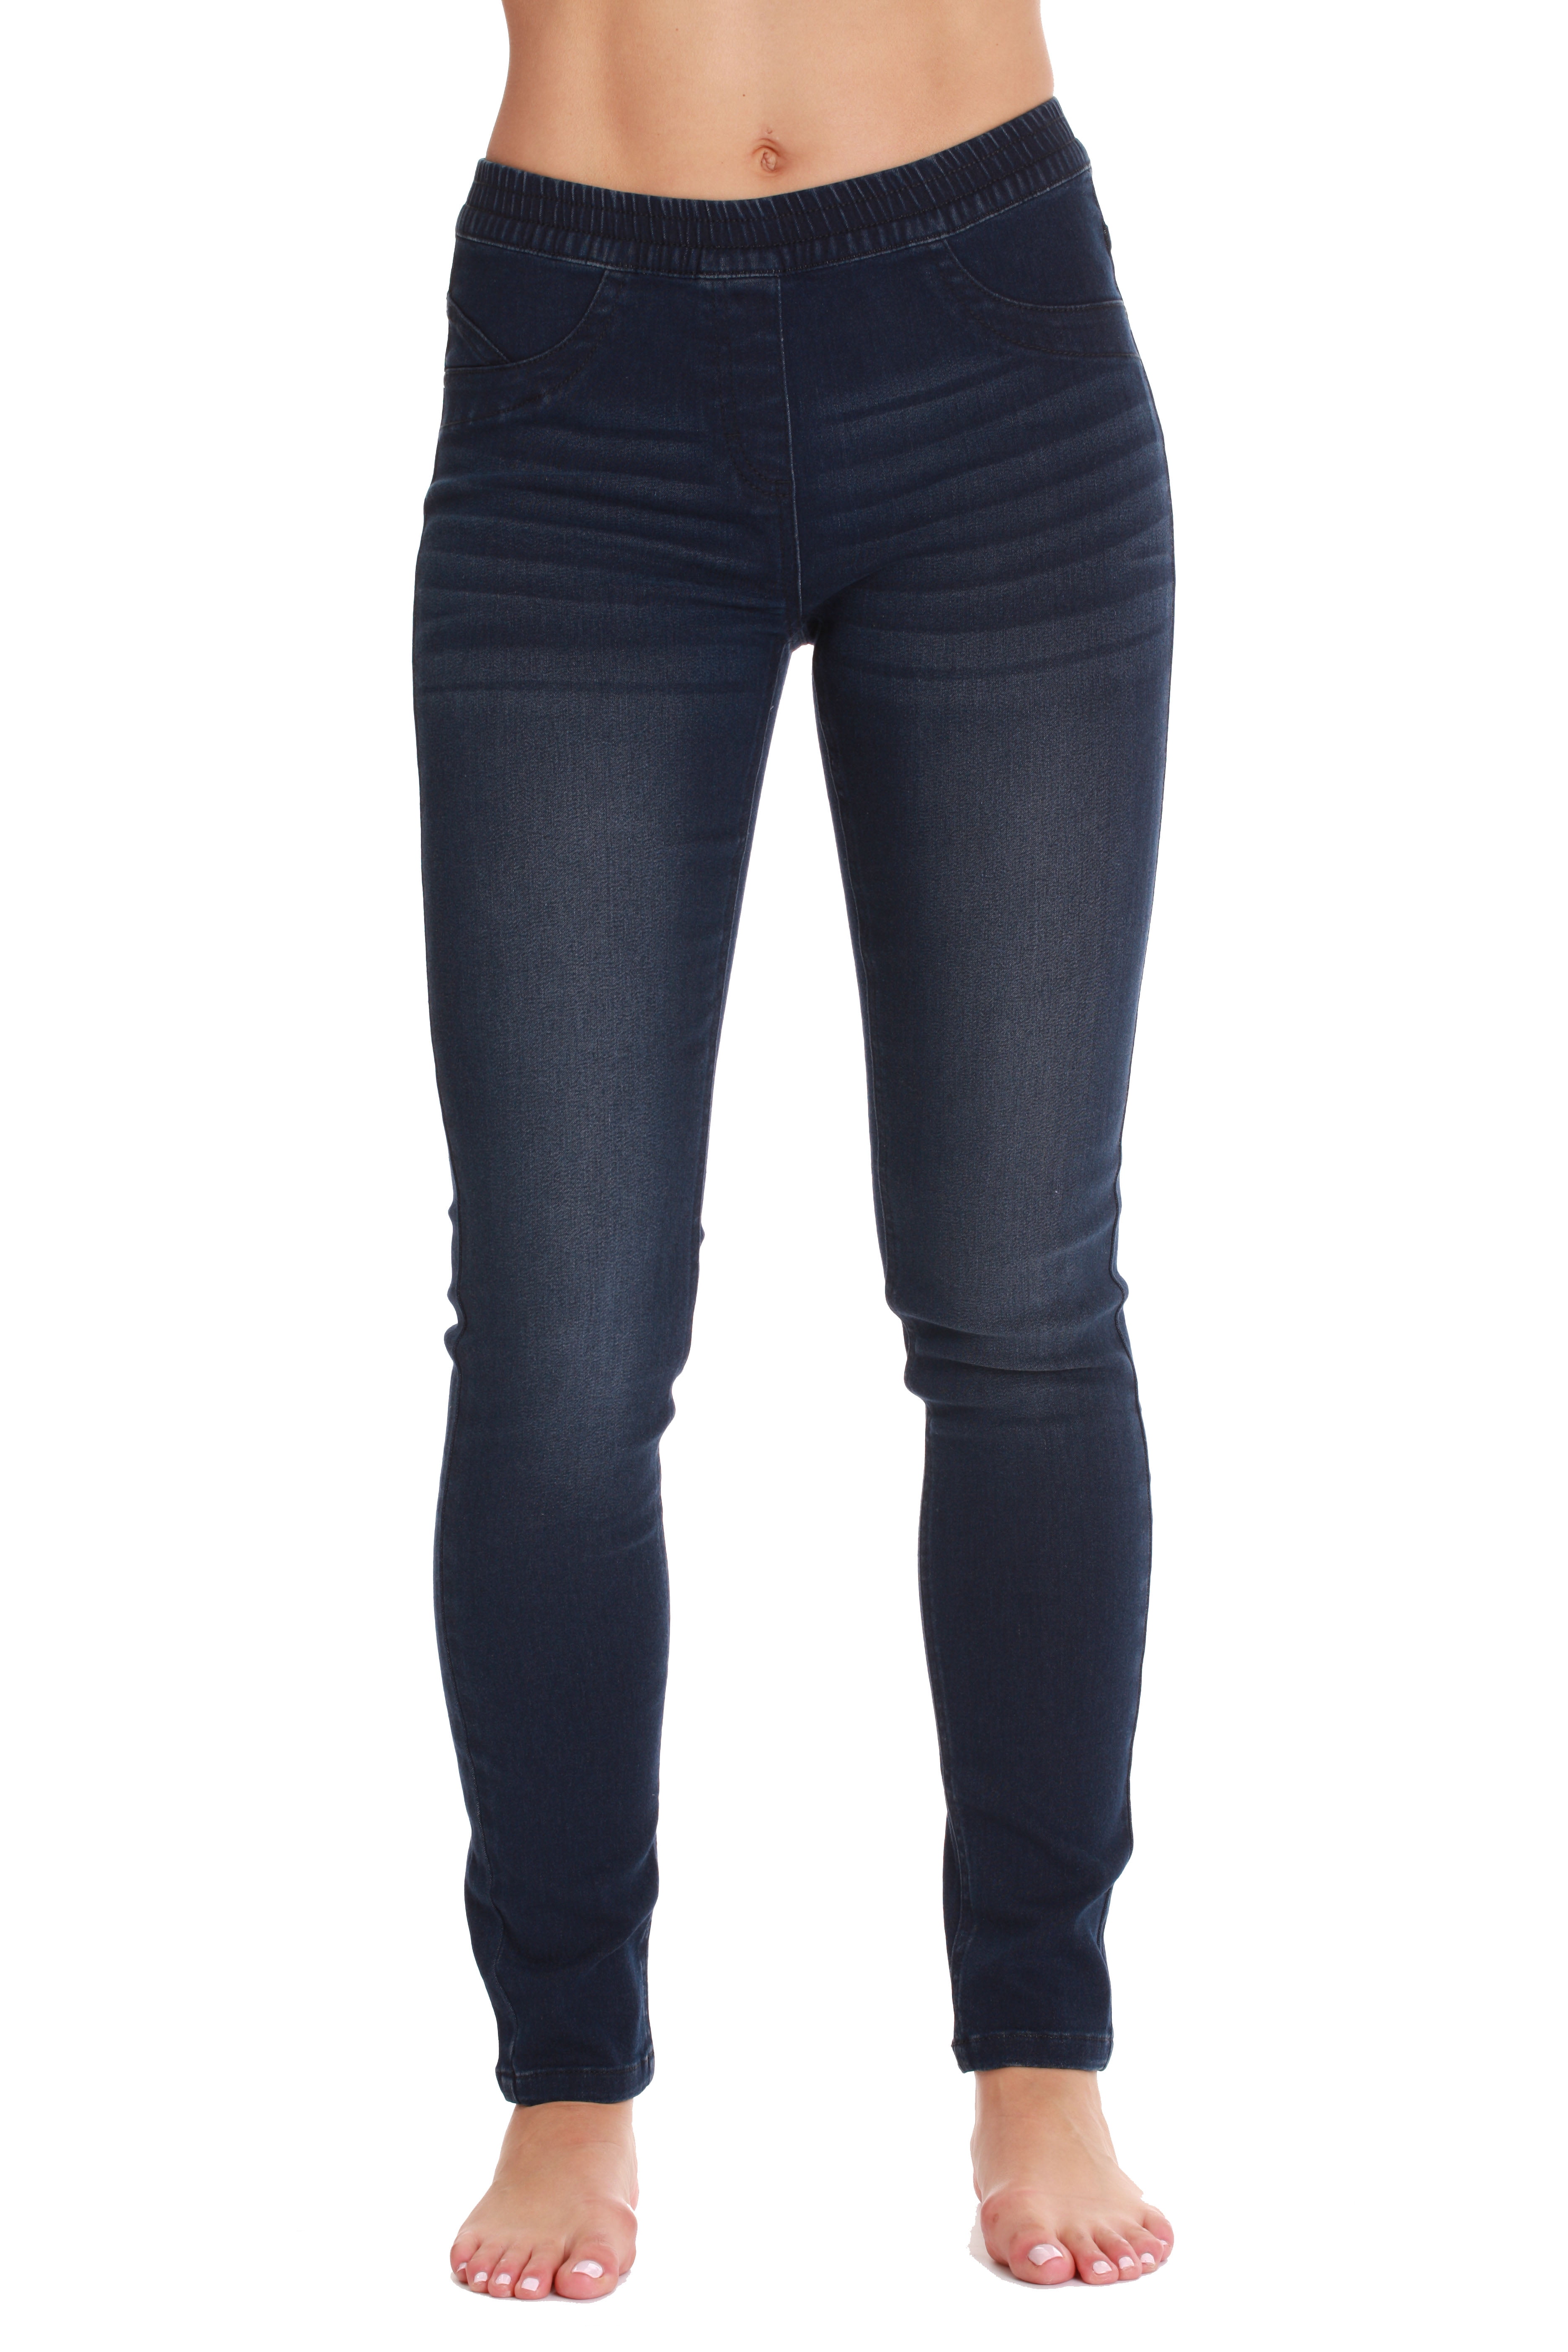 Just Love Women's Denim Jeggings with Pockets - Comfortable Stretch Jeans  Leggings (Dark Denim, X-Large)